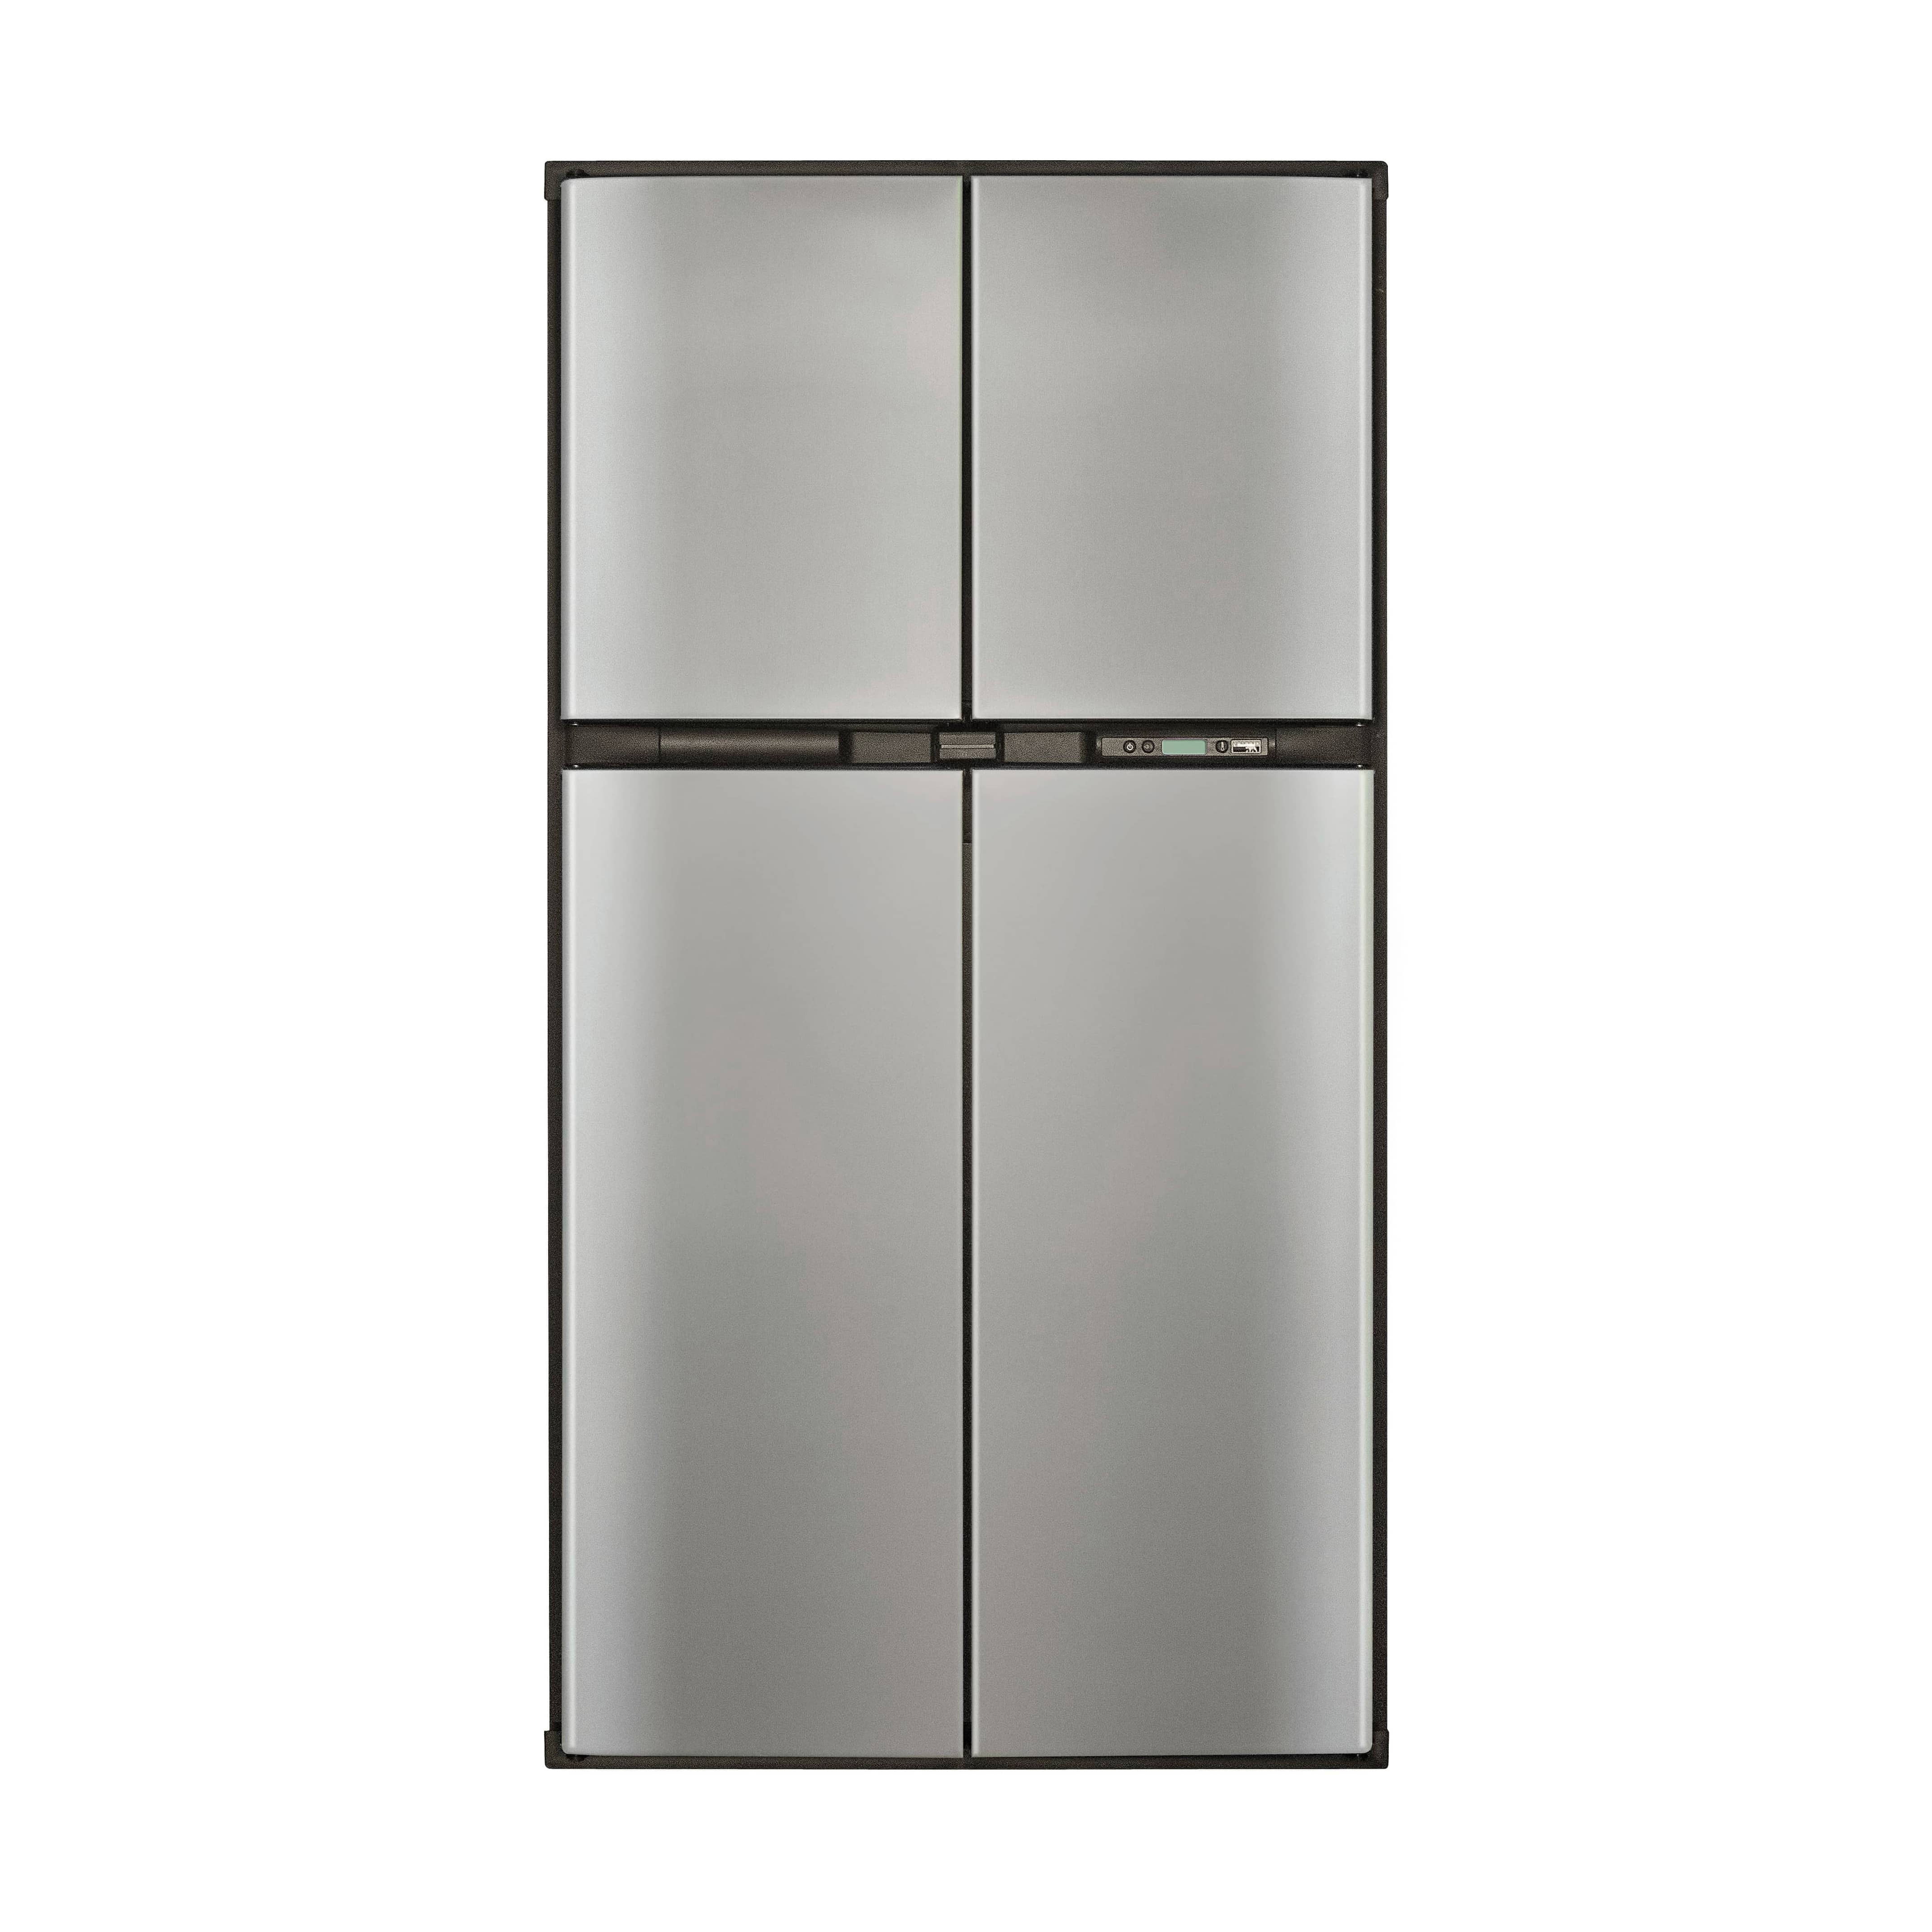 12v rv fridge